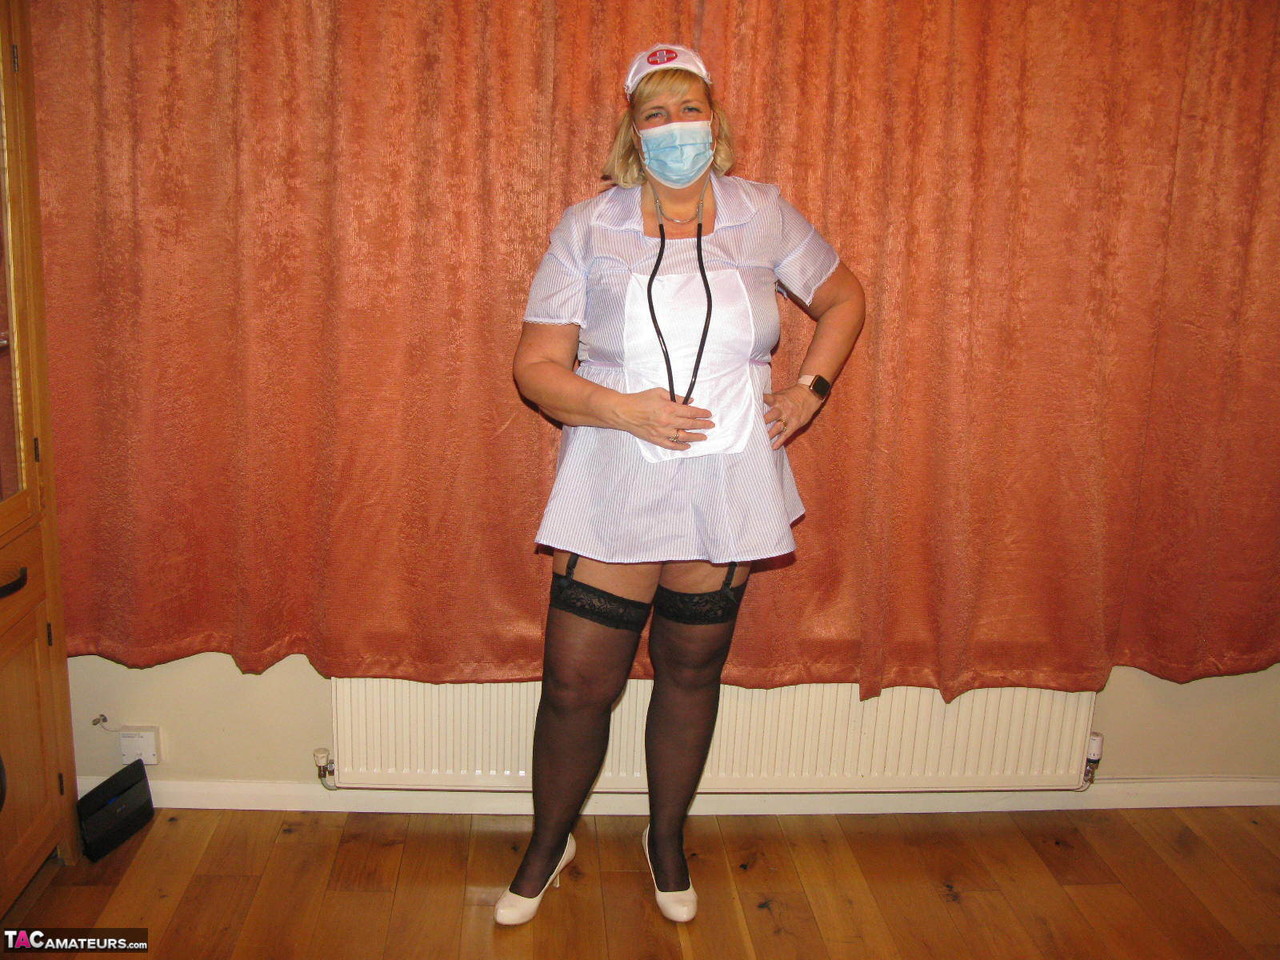 Fat nurse Chrissy Uk removes a surgical mask and uniform to model lingerie porn photo #424682137 | TAC Amateurs Pics, Chrissy Uk, Mature, mobile porn